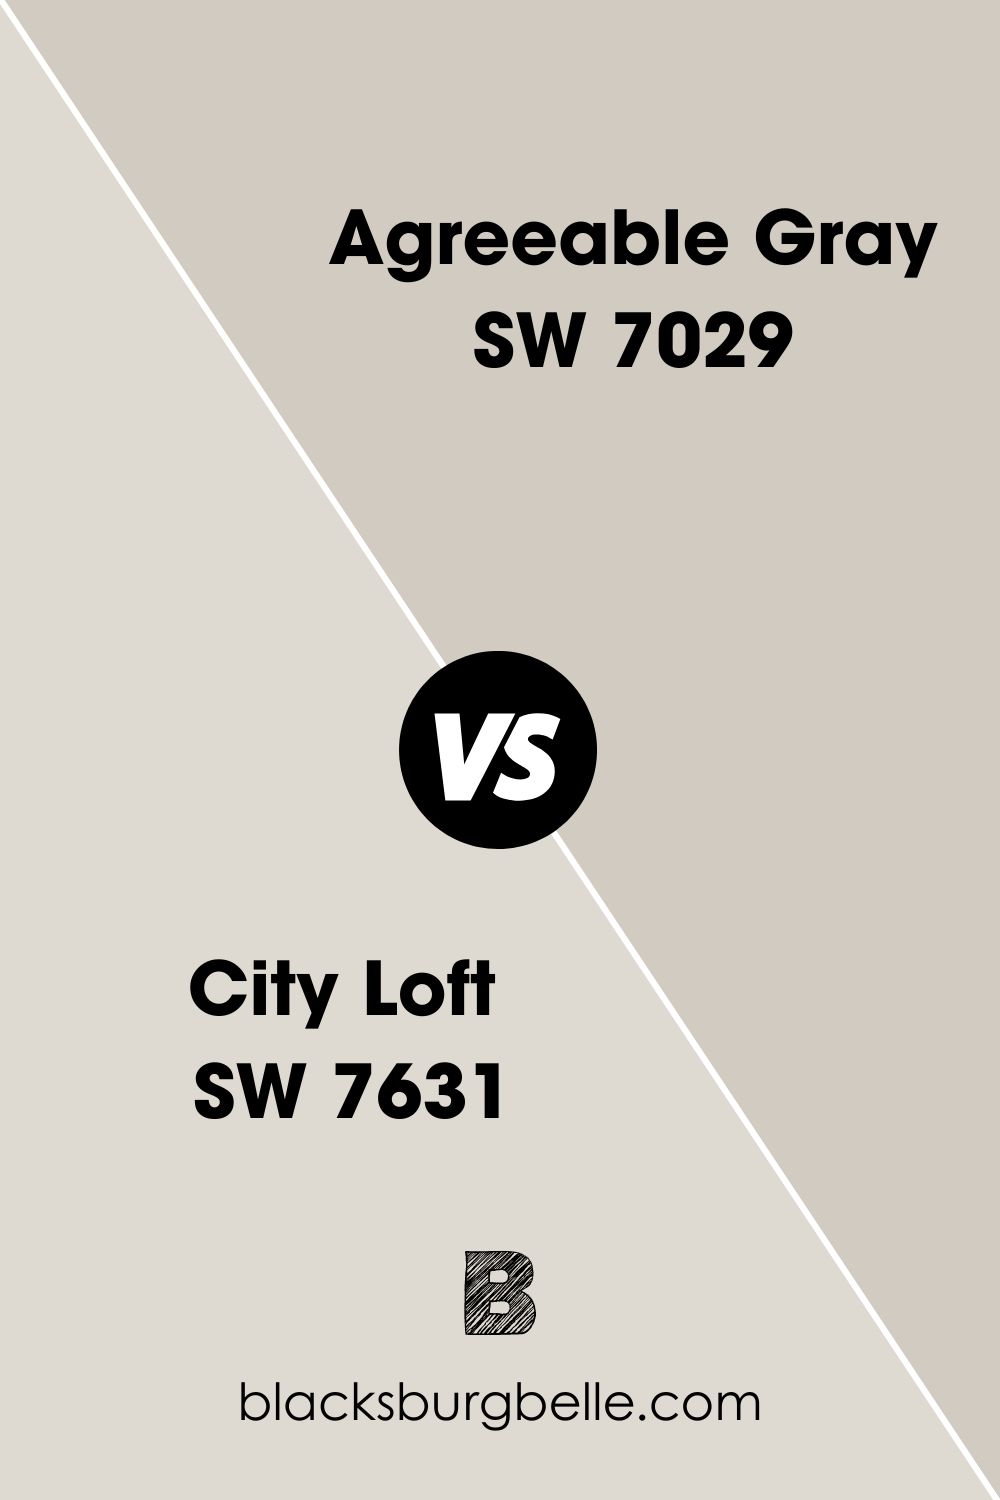 City Loft SW 7631